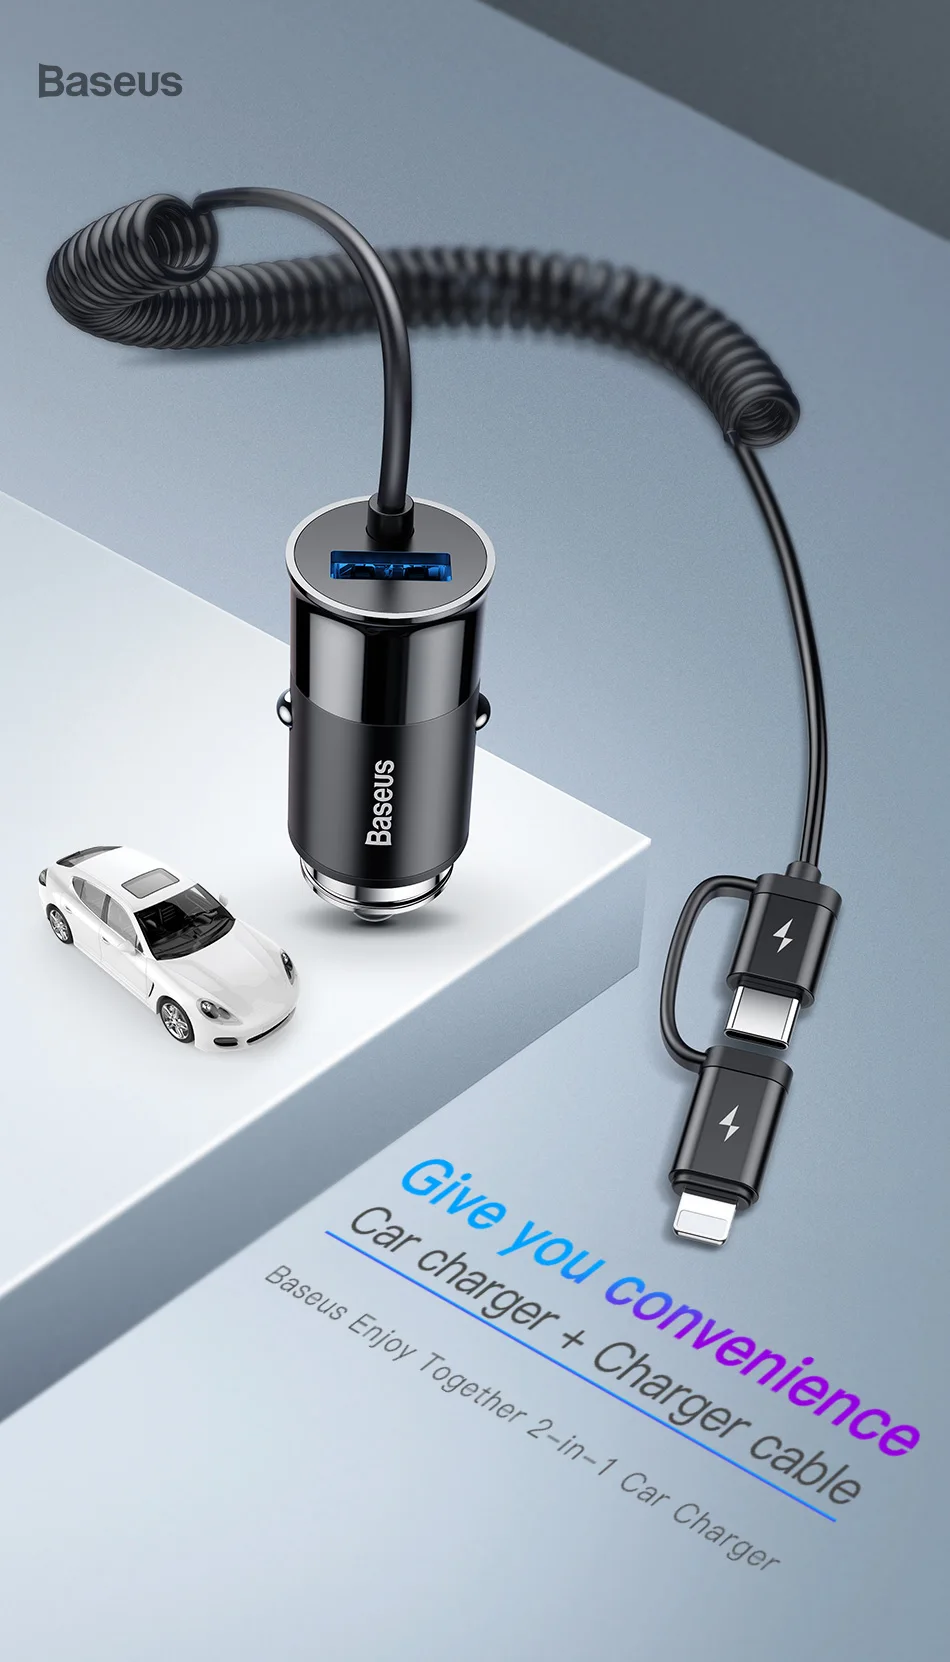 Baseus 4.8A автомобильное зарядное устройство кабель USB разъем адаптер для Iphone Xs Max samsung Plus 10 Тип C телефон зарядка авто зарядное устройство аксессуар